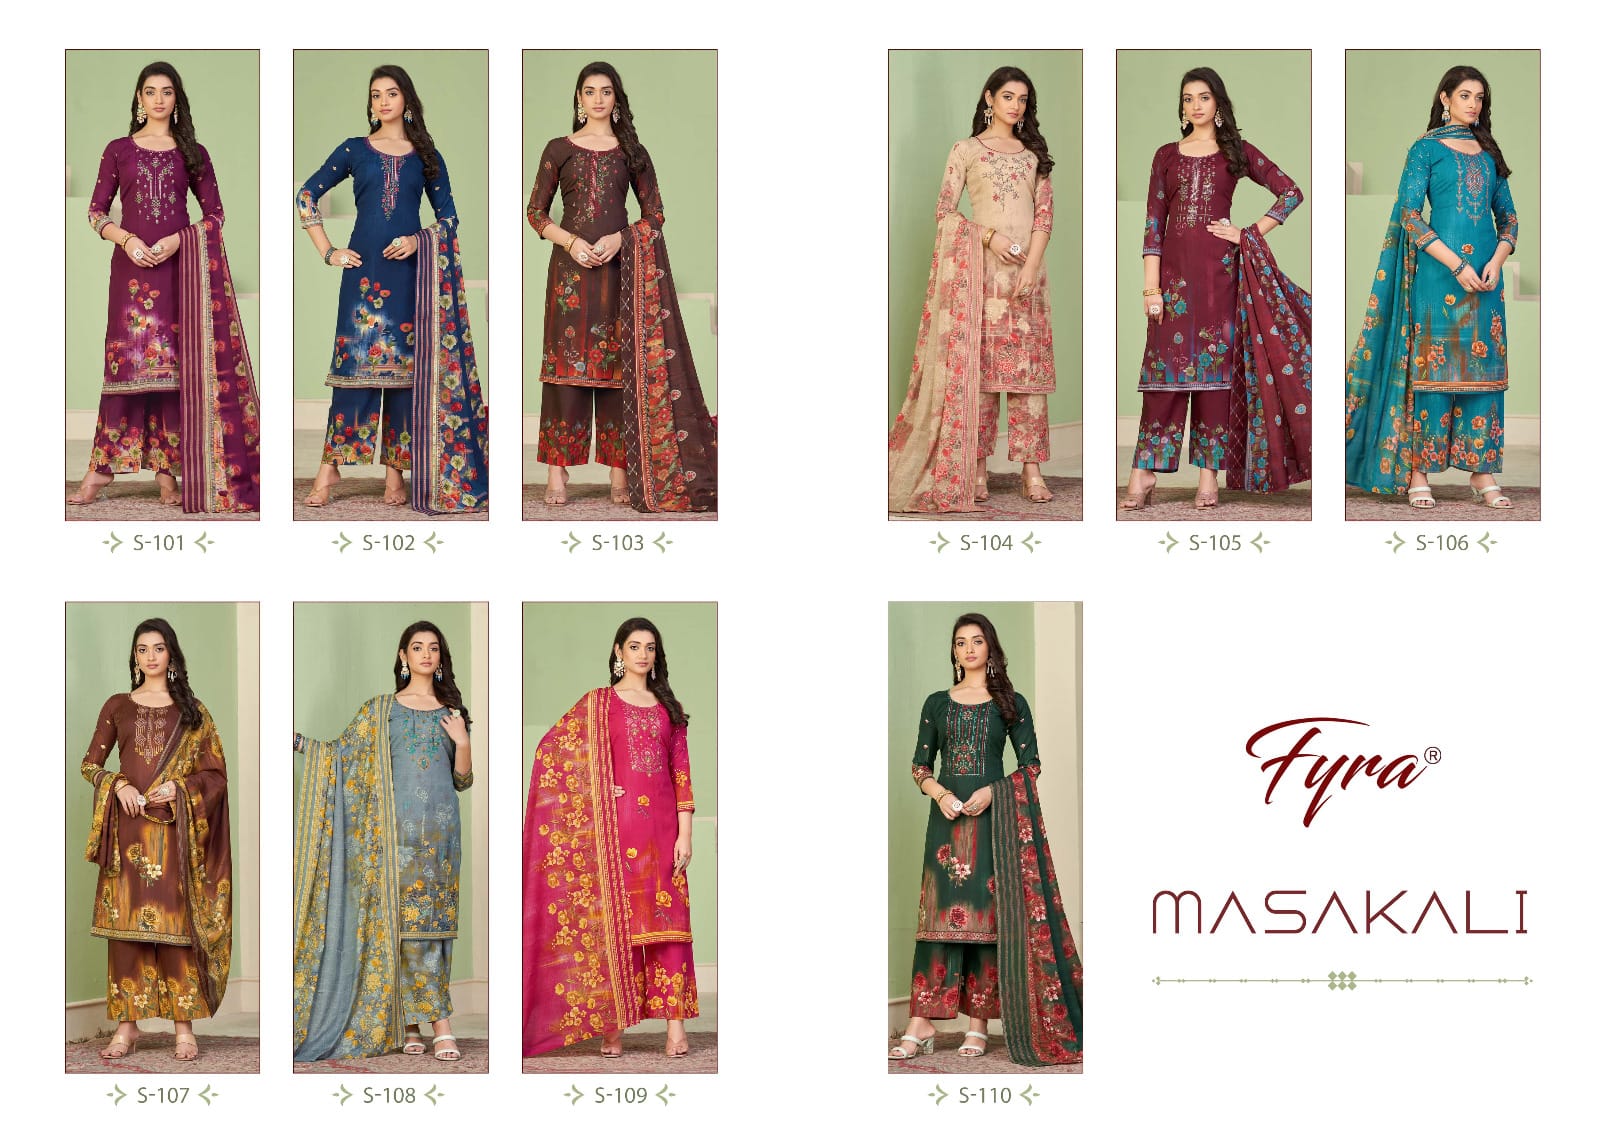 fyra alok suit masakali cotton graceful look salwar suit catalog